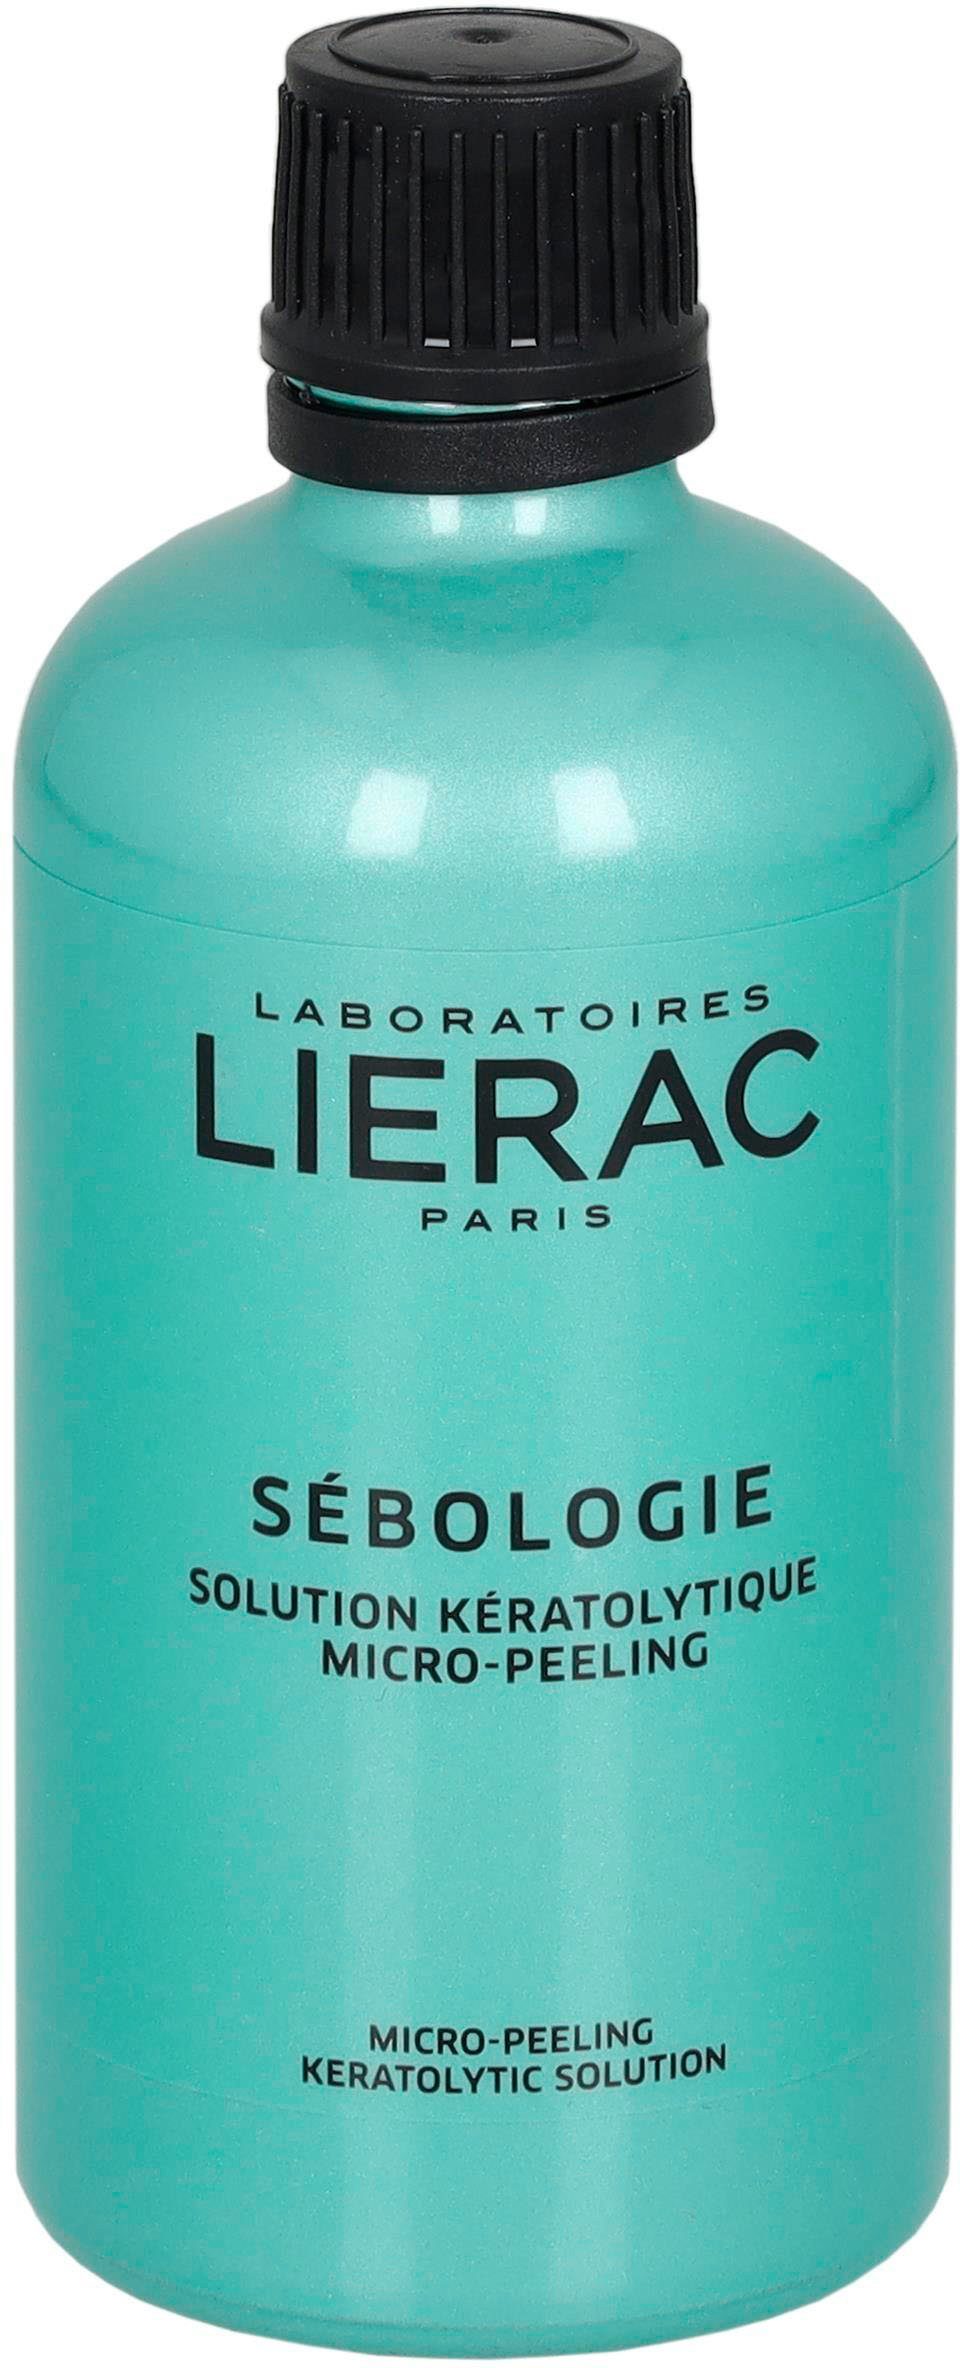 Micro-Peeling Sebologie Keratolytique Gesichts-Reinigungsfluid Solution LIERAC